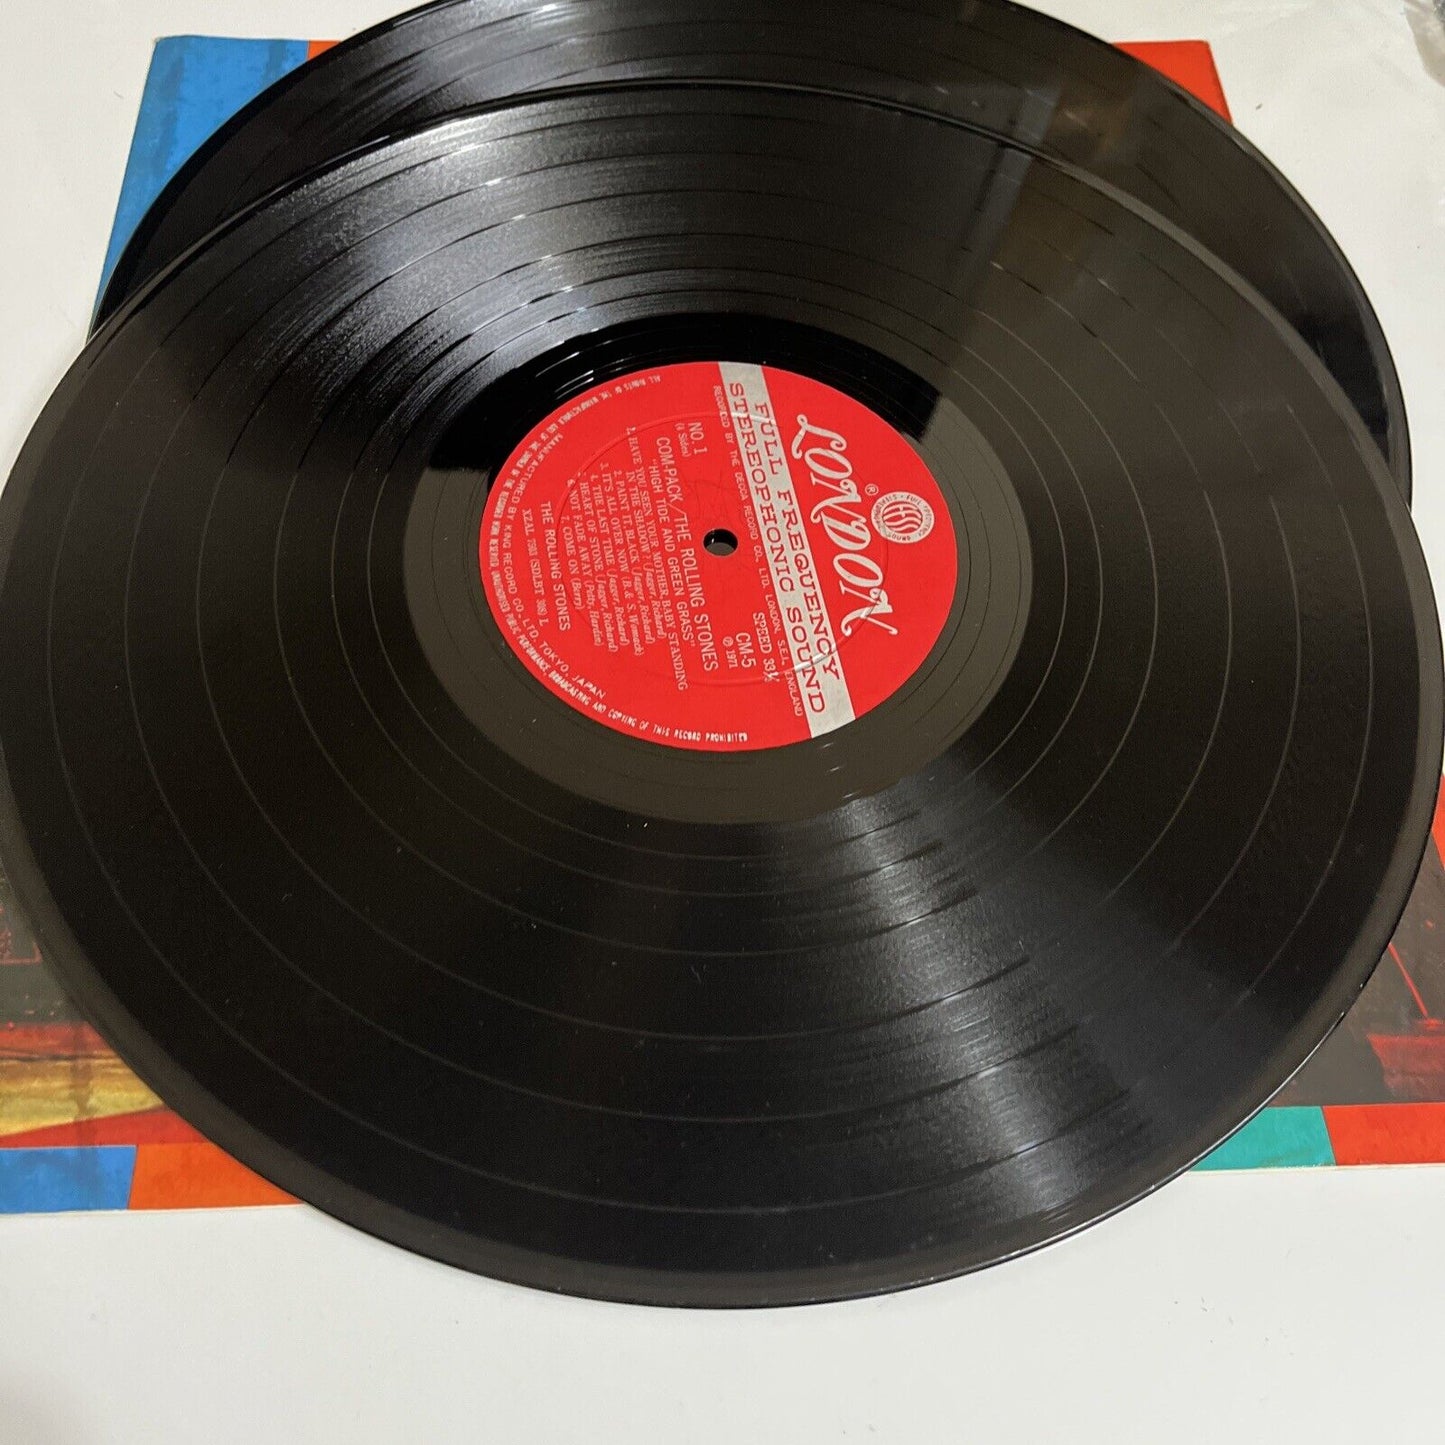 The Rolling Stones – Com Pack LP 2x Vinyl Record 1971 CM-5